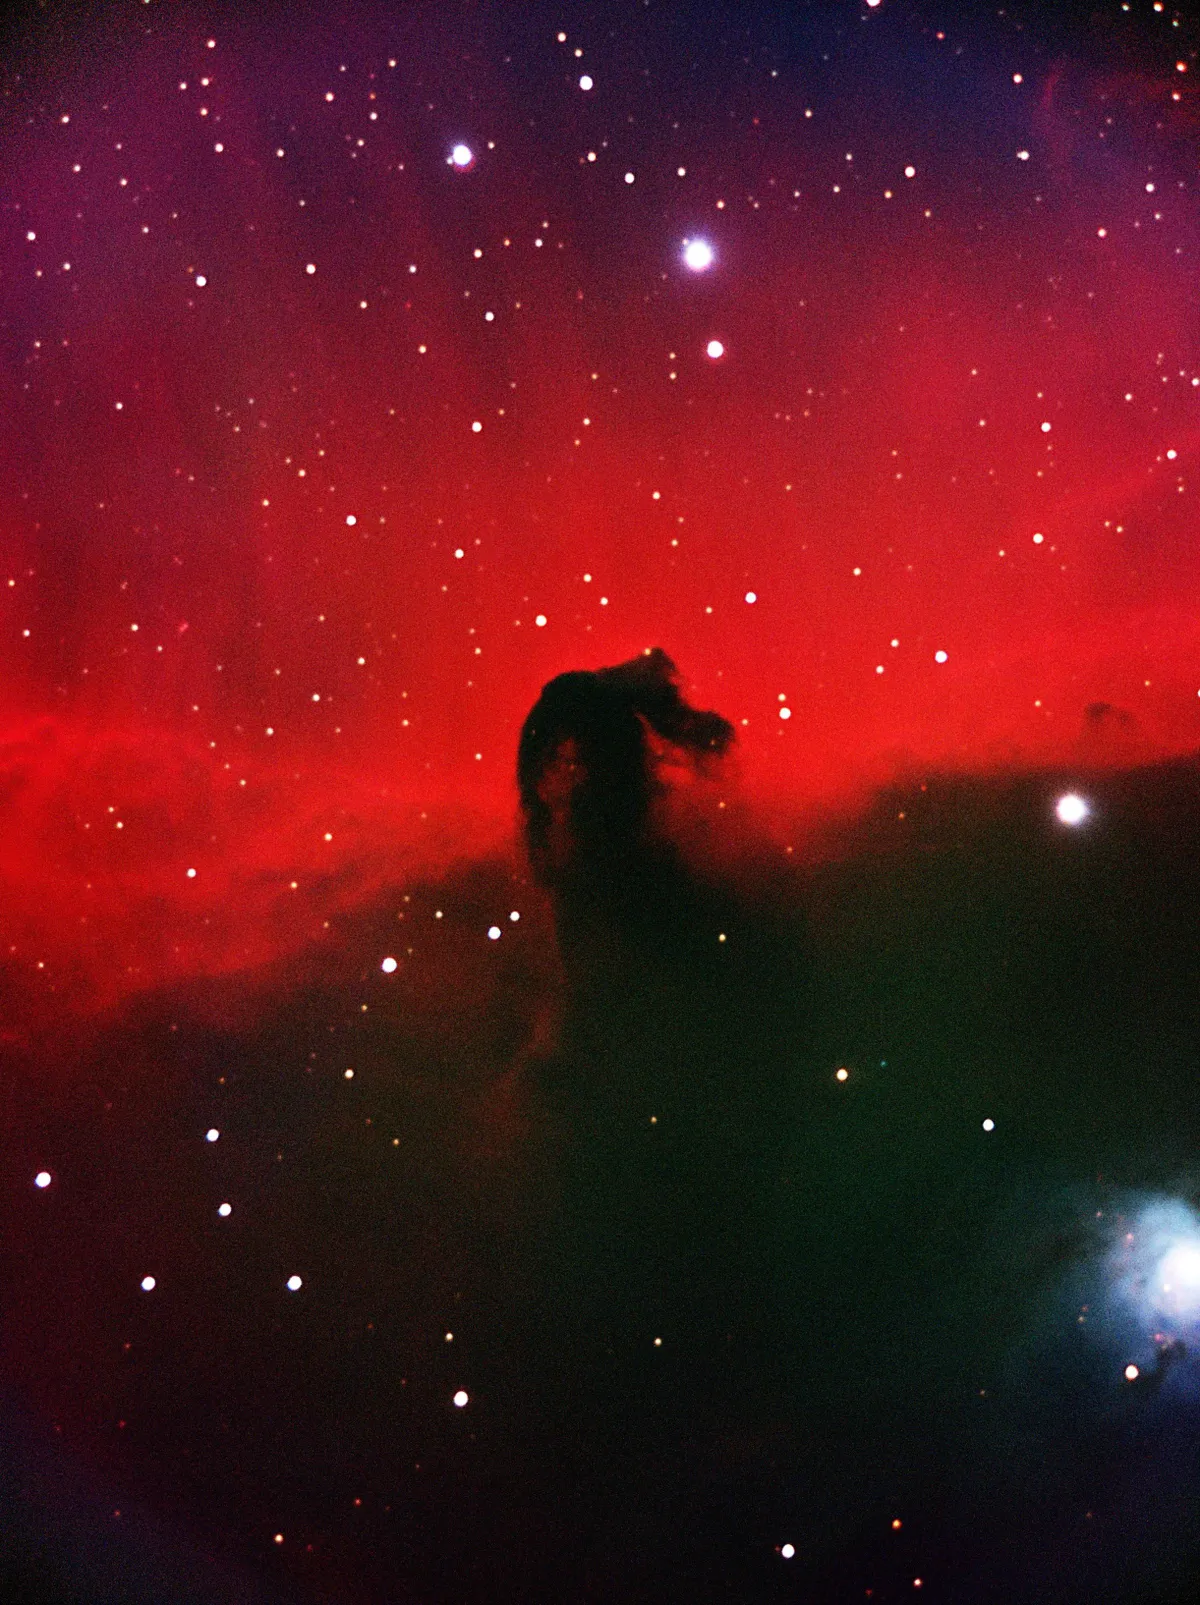 B33 Horsehead Nebula by Mark Griffith, Swindon, Wiltshire, UK. Equipment: Celestron c11 sct, Skywatcher NEQ6 pro mount,Atik 383L  camera, motorised filter wheel and Astronomik LRGB filters.